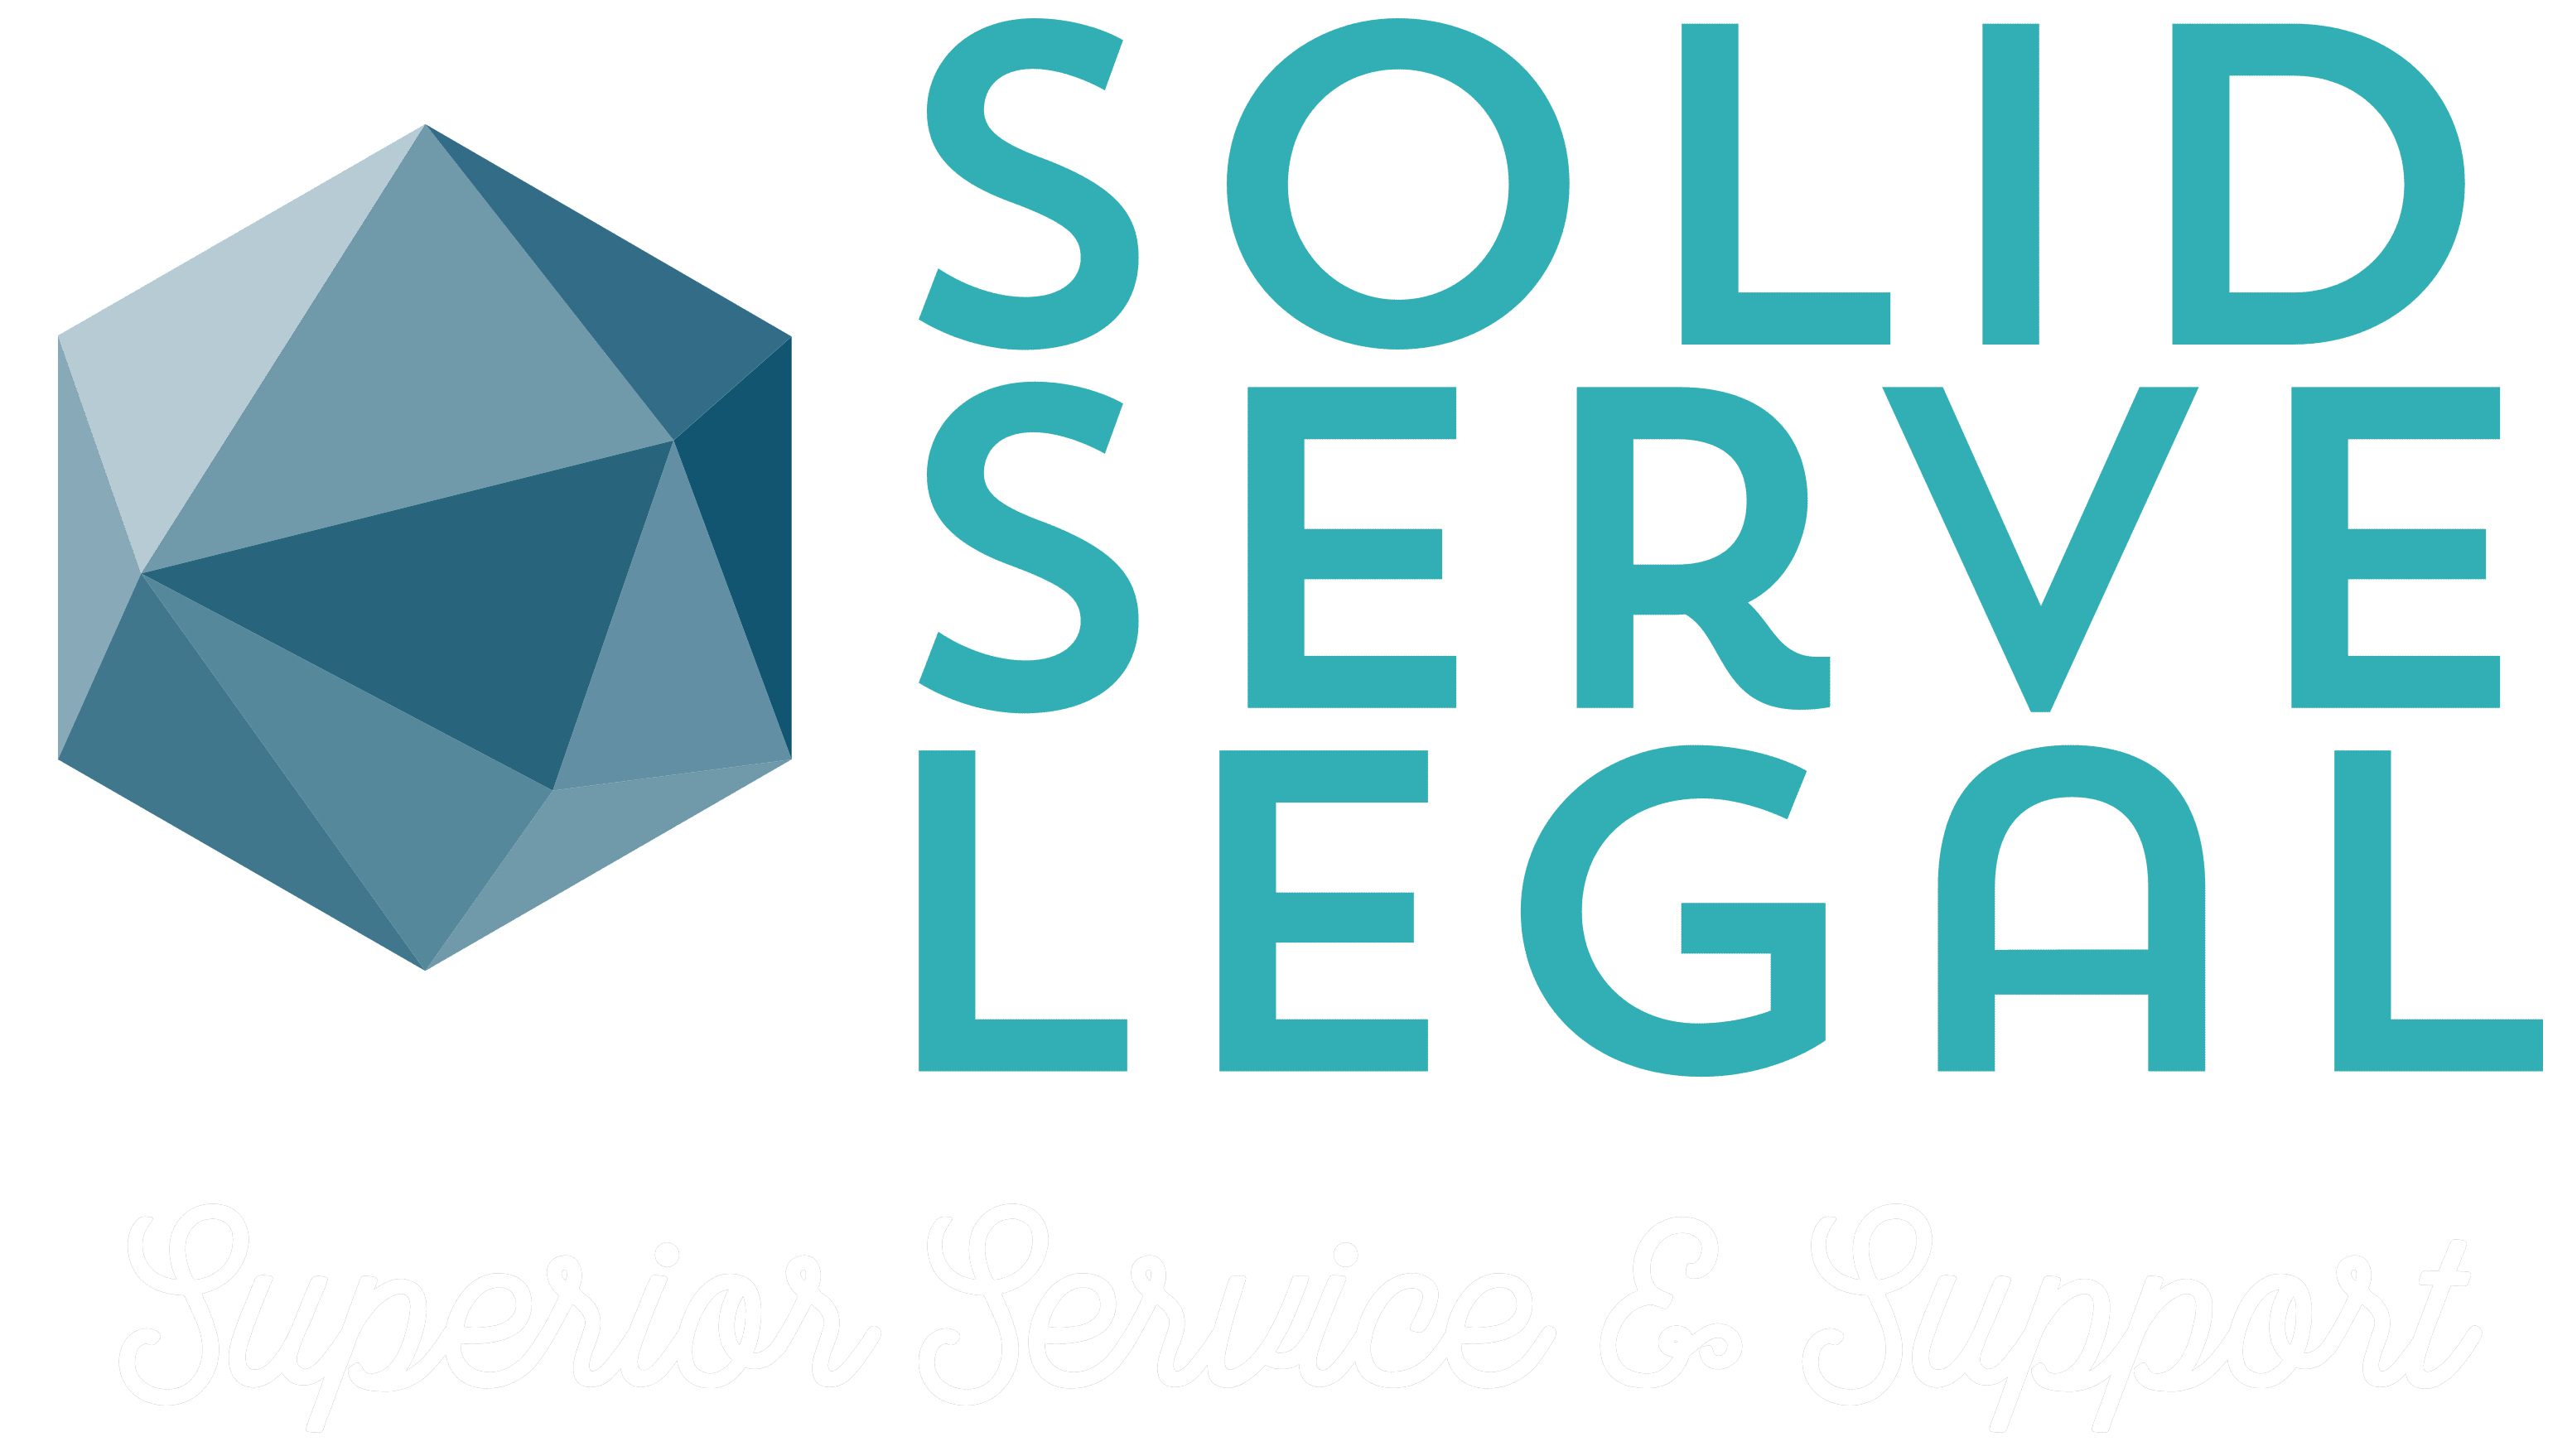 Solid Serve Legal